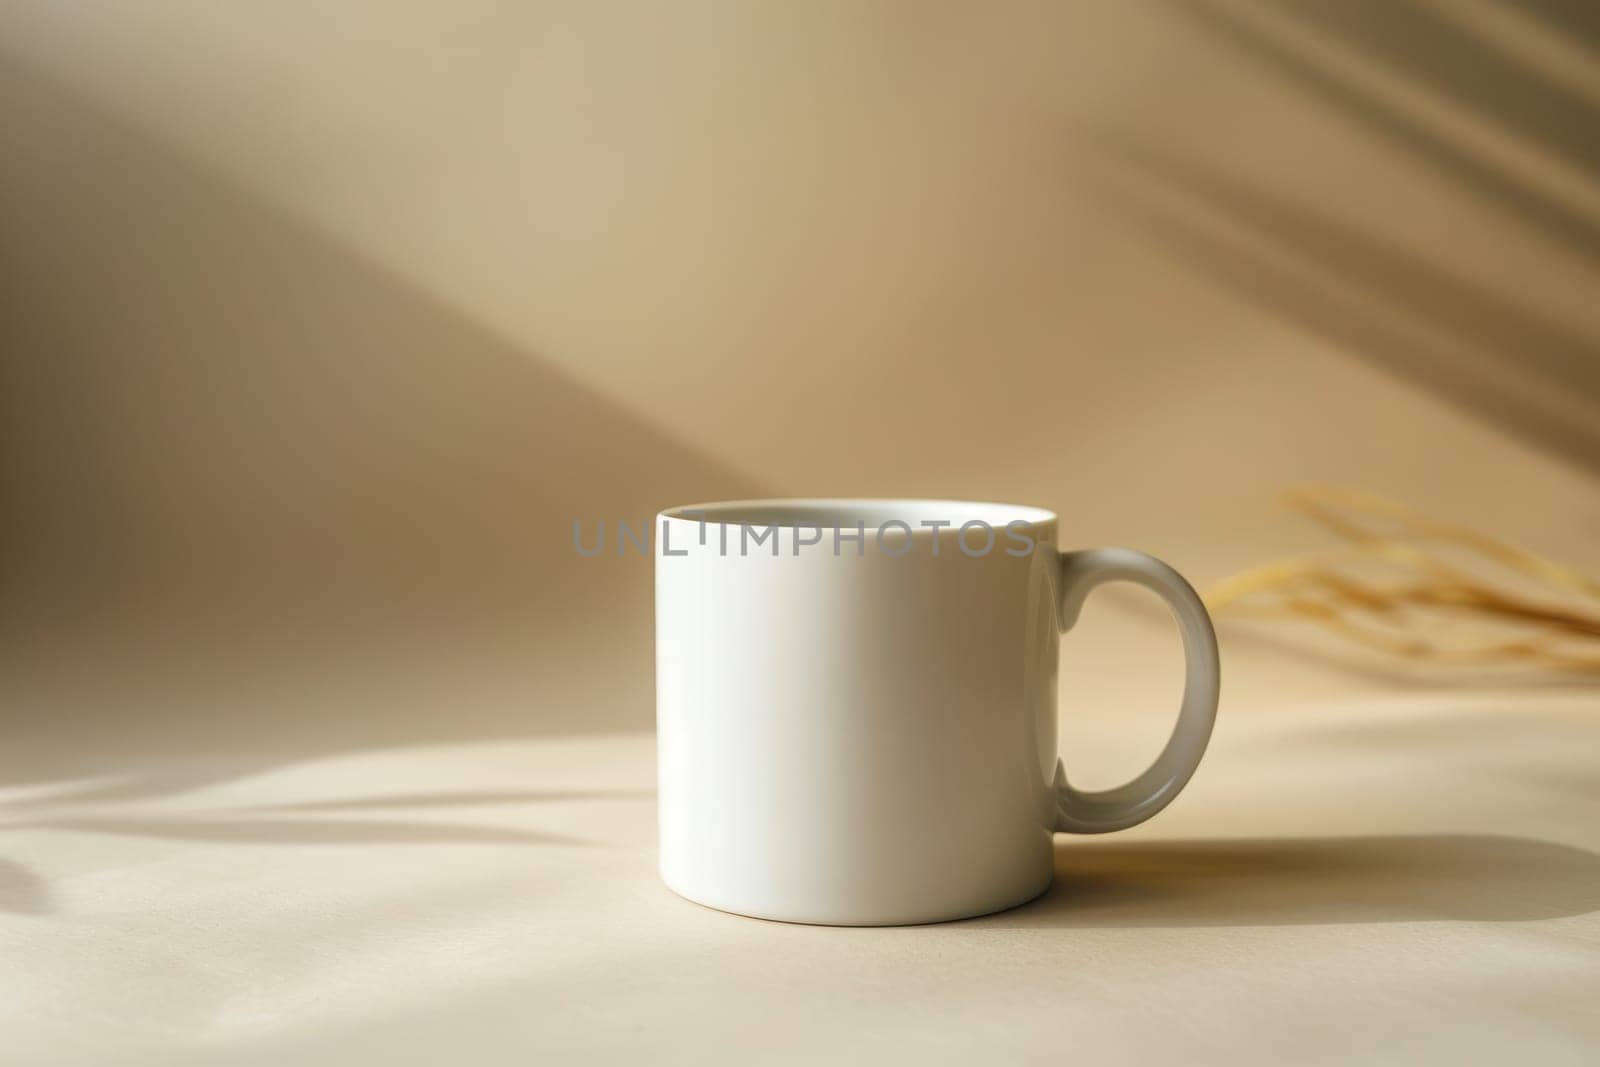 A white mug mock up blank template for your design advertising logo, White mug mock up in minimalist style.